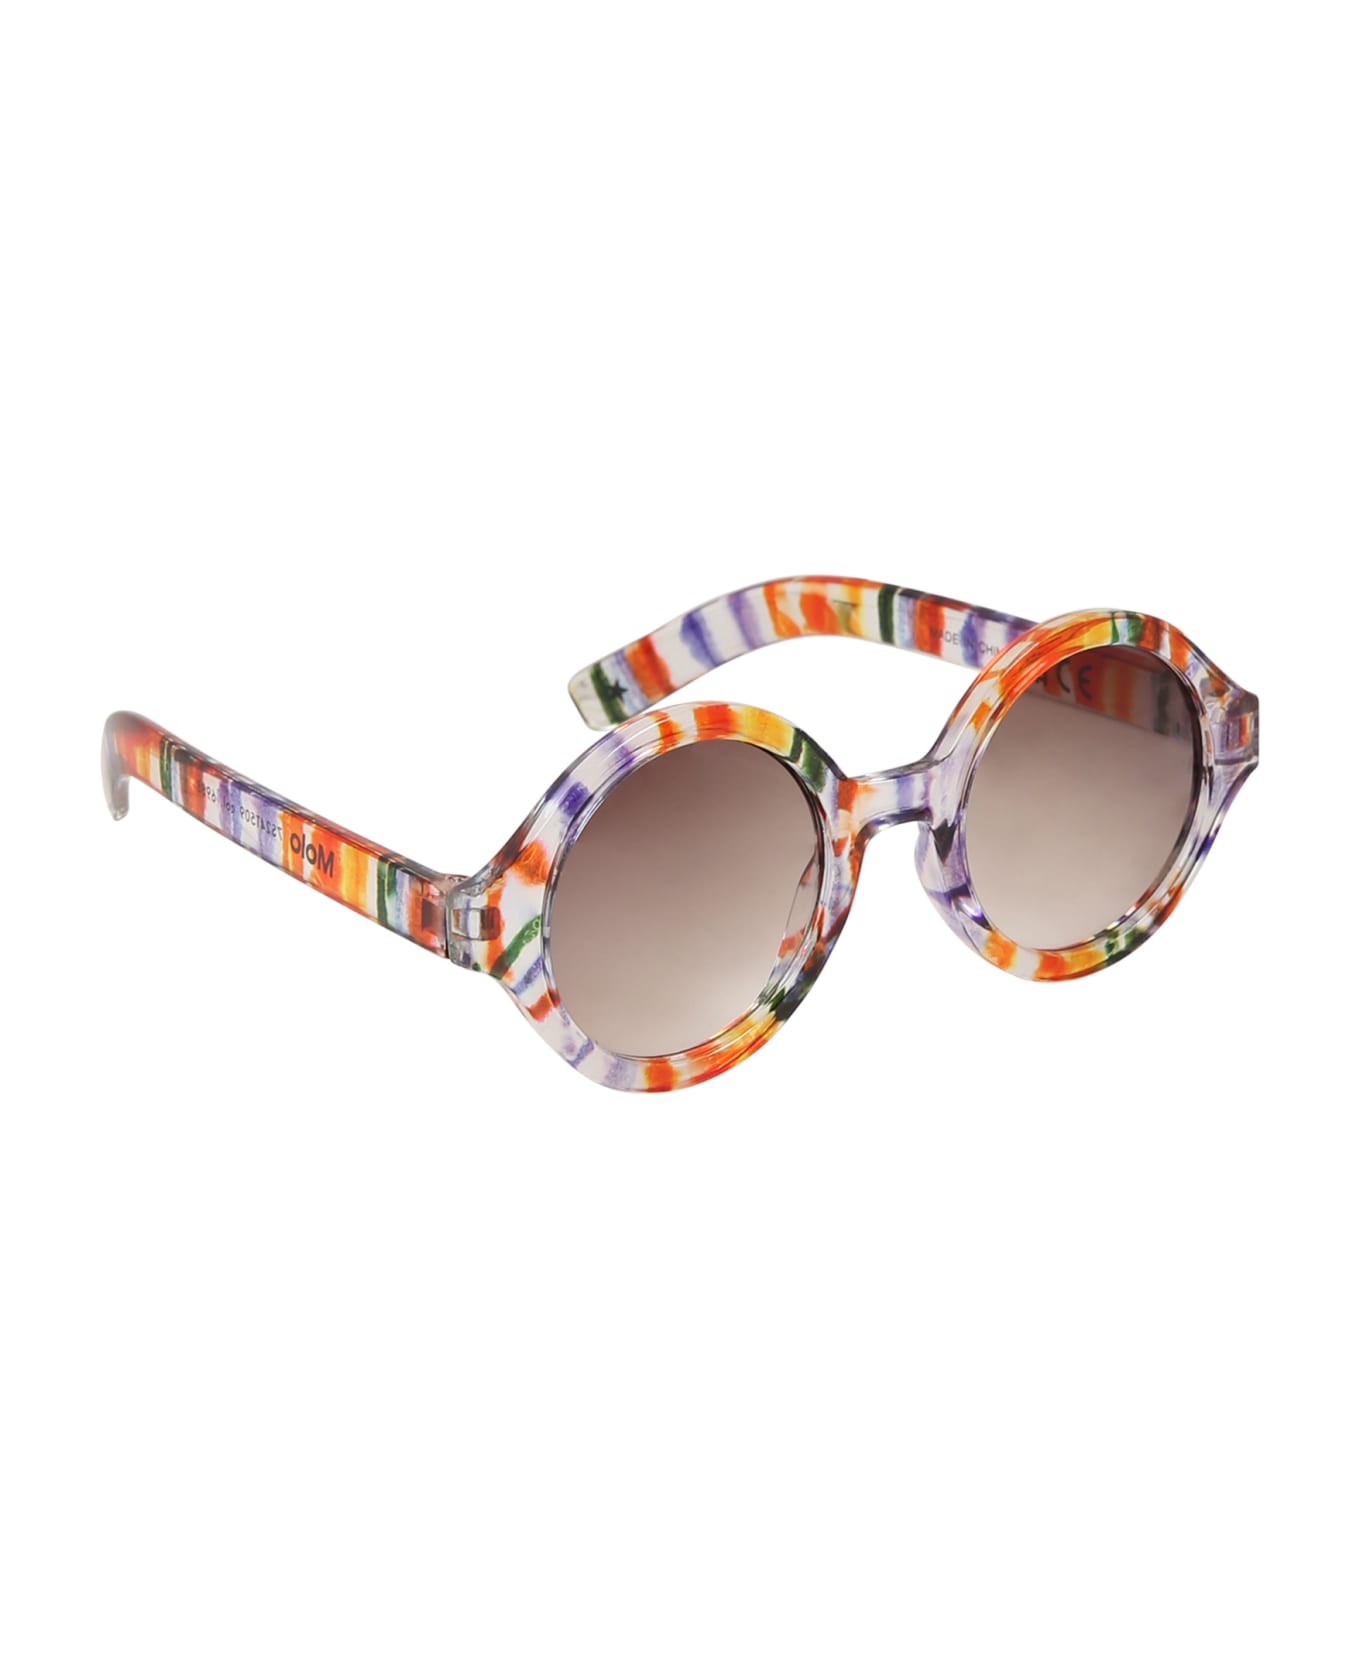 Molo Clear Shelby Sunglasses For Kids - Multicolor